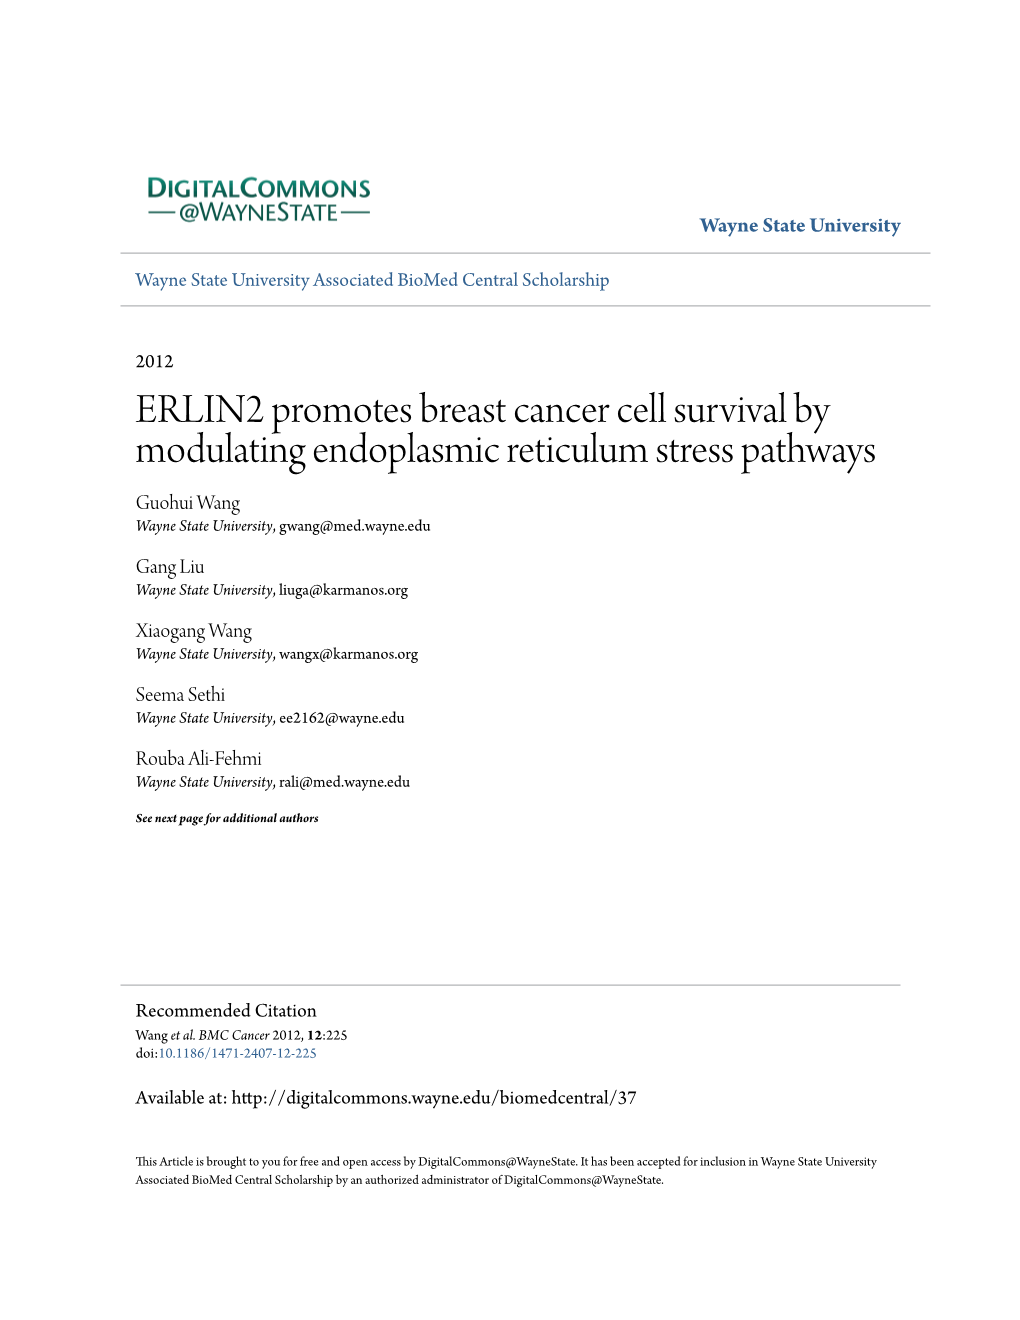 ERLIN2 Promotes Breast Cancer Cell Survival by Modulating Endoplasmic Reticulum Stress Pathways Guohui Wang Wayne State University, Gwang@Med.Wayne.Edu